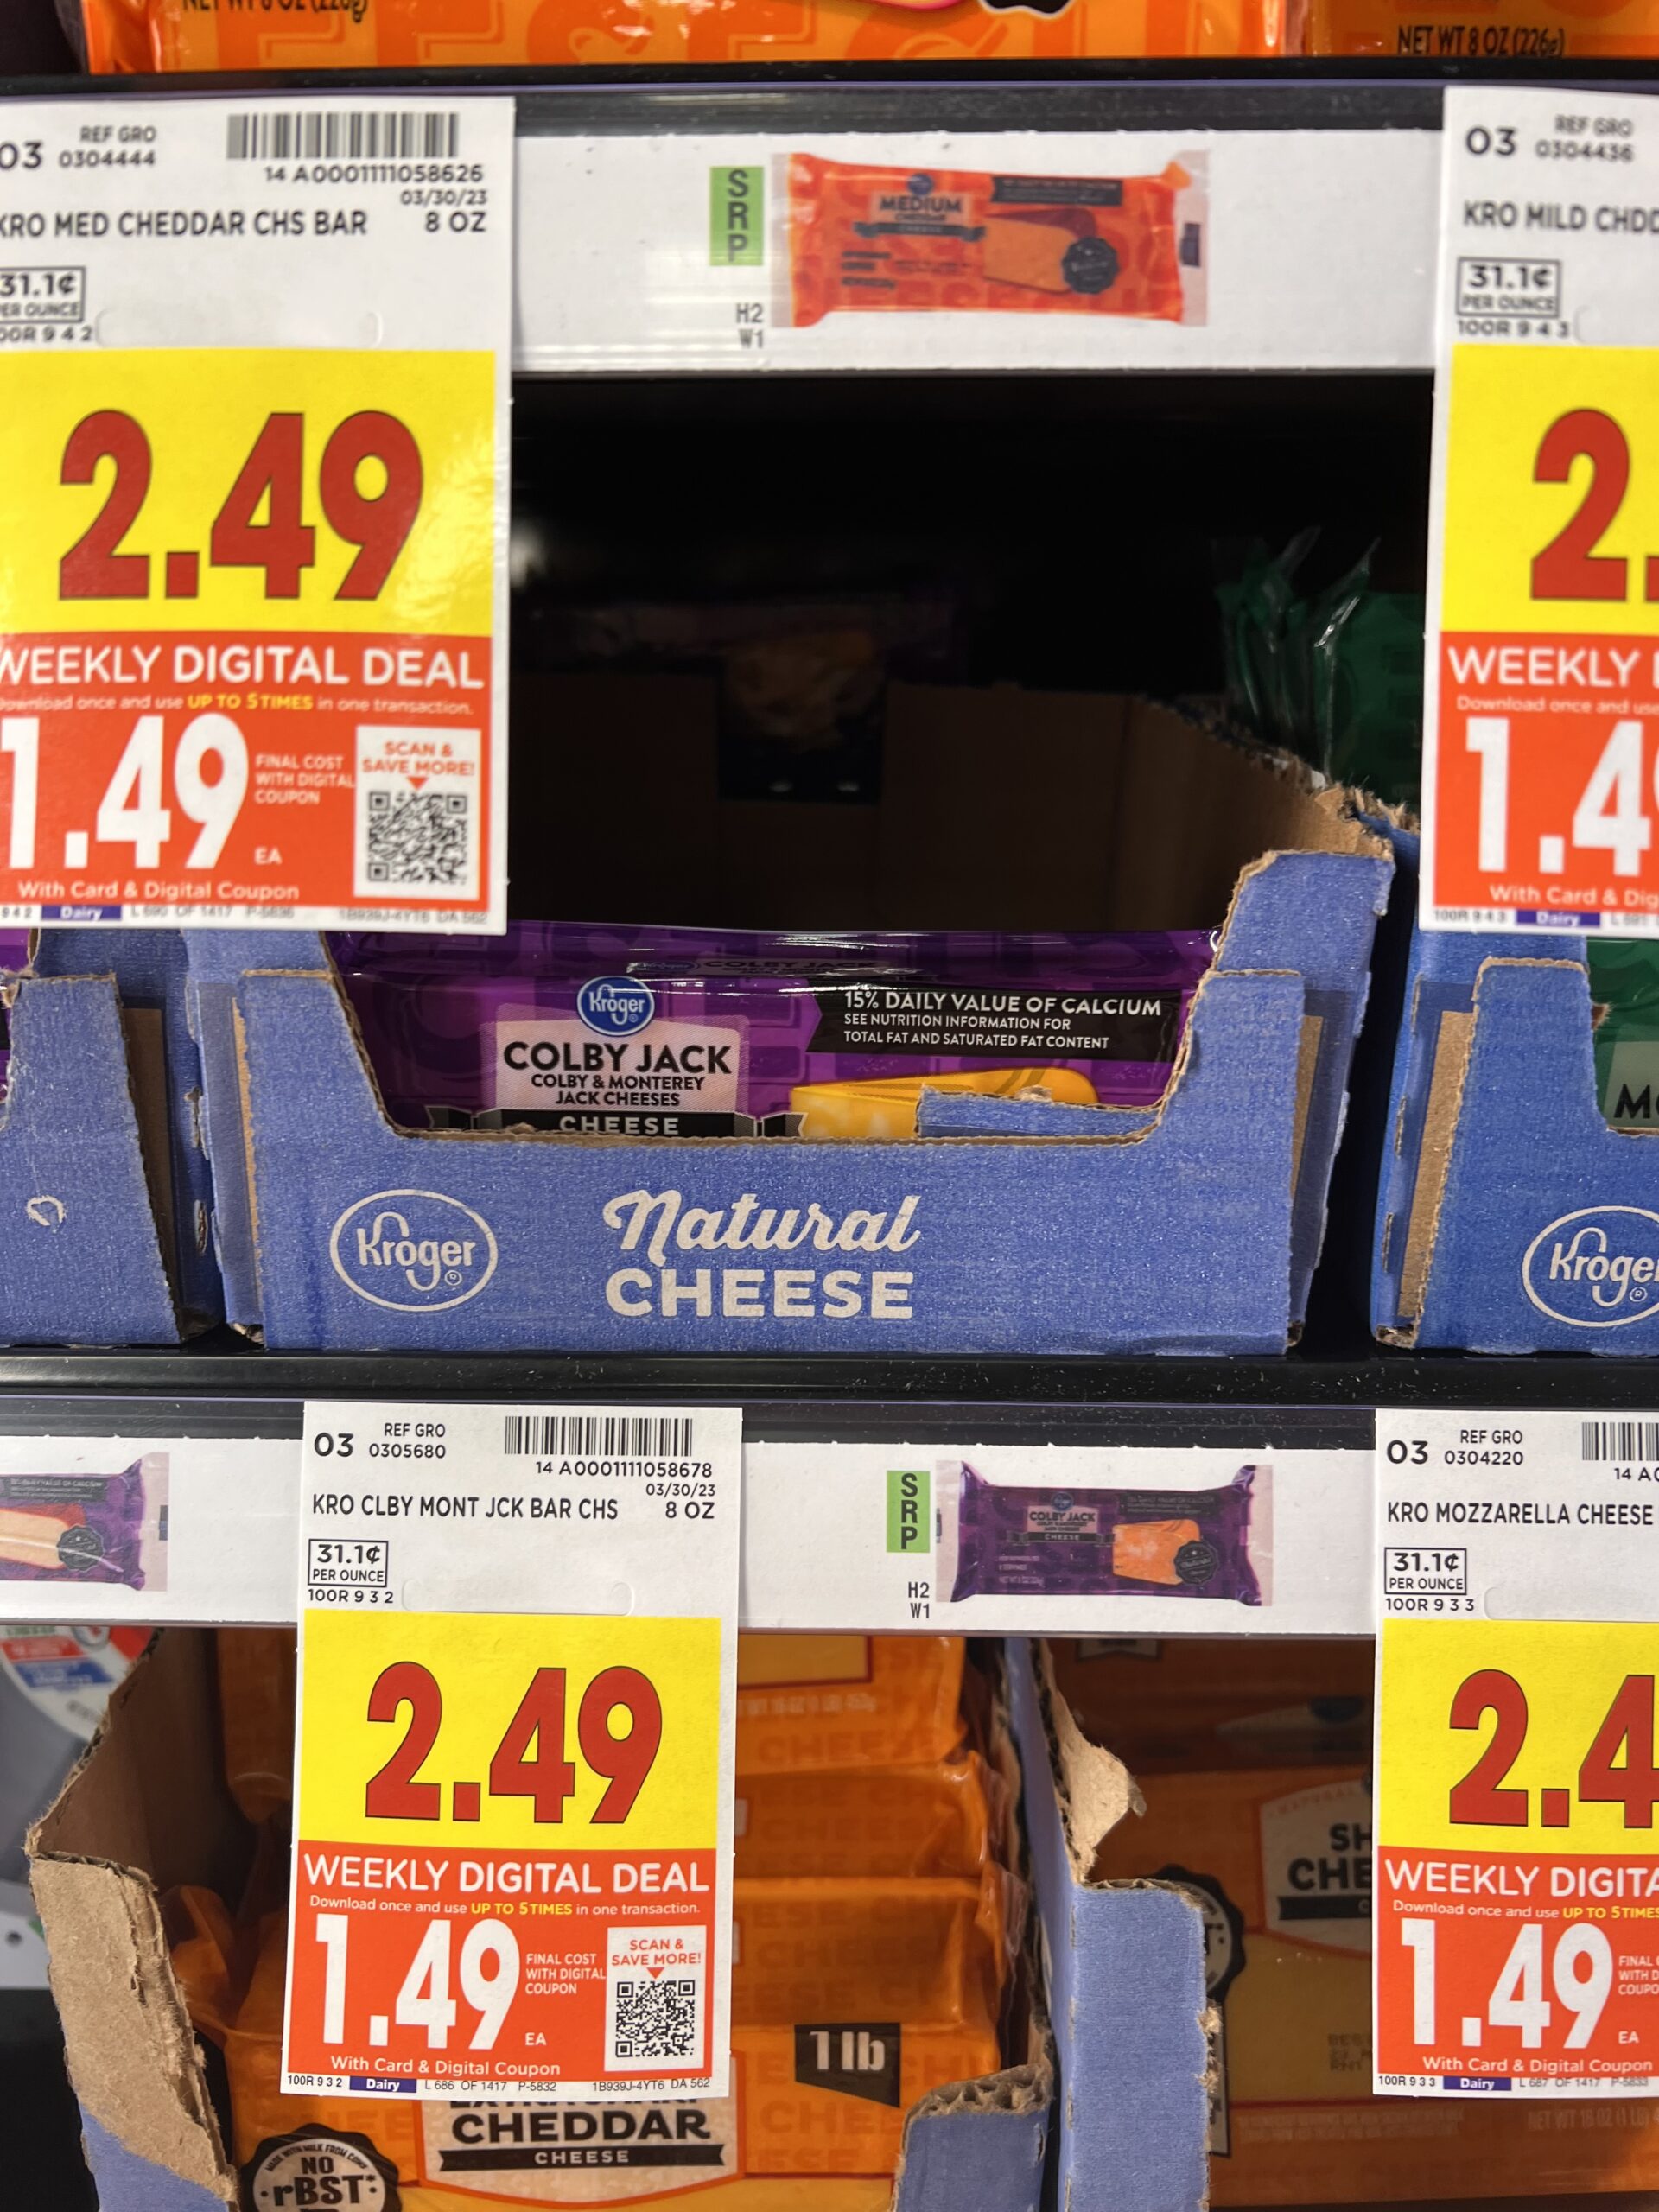 kroger cheese shelf image 4